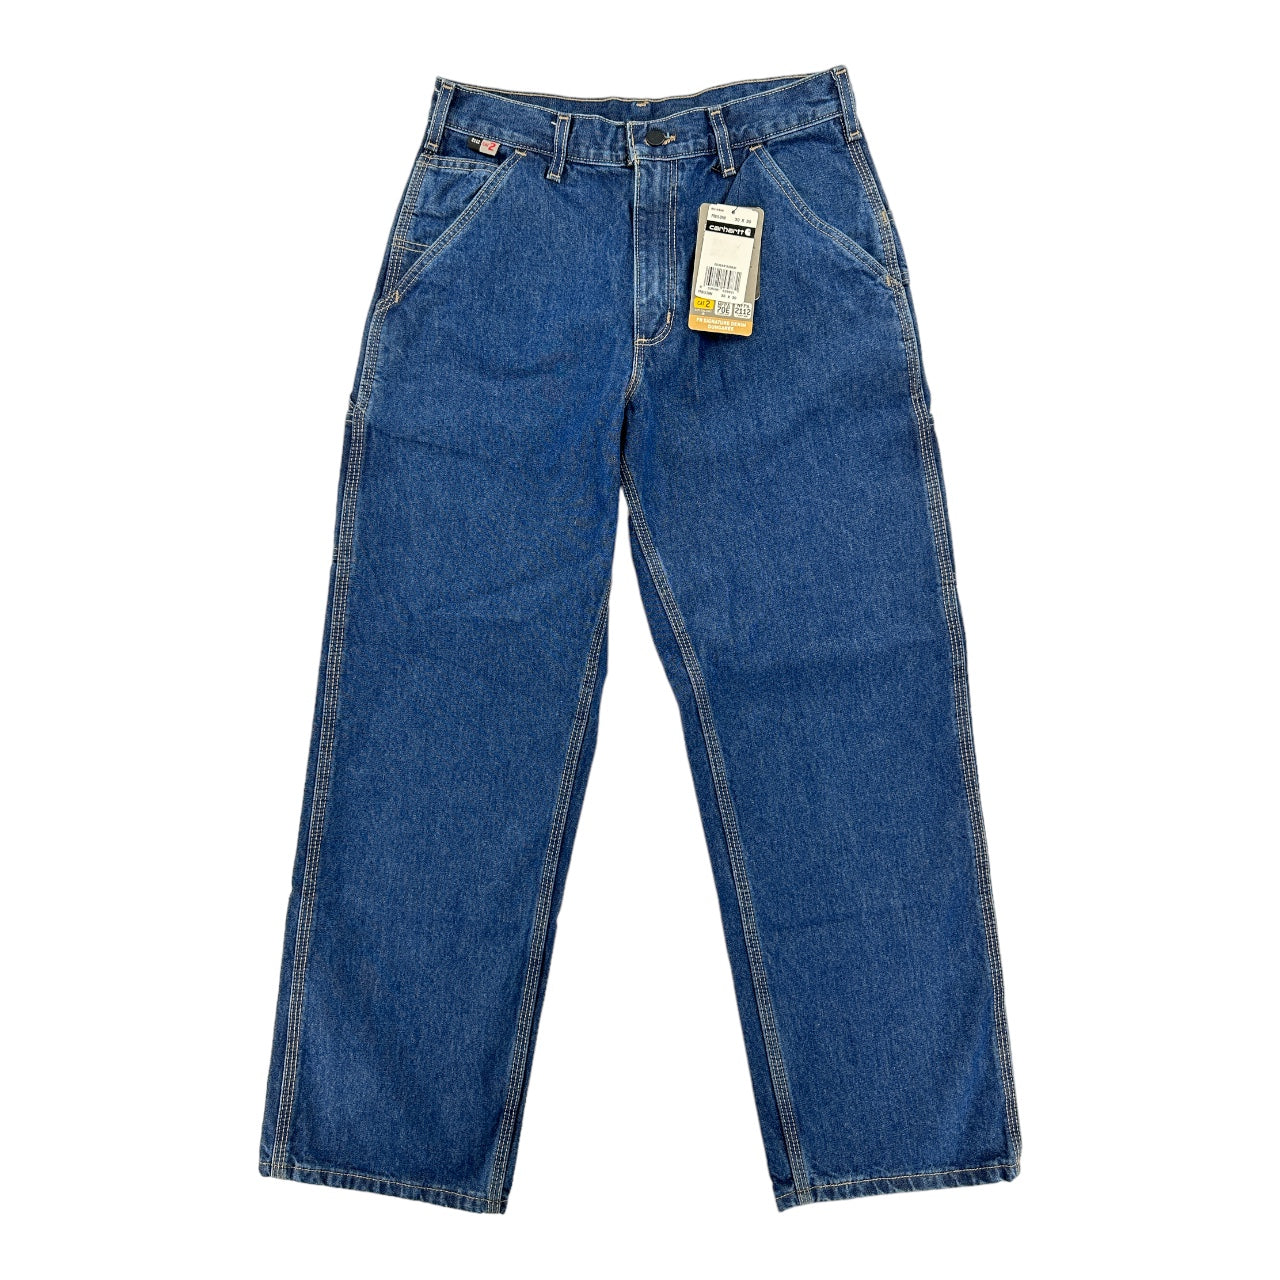 Carhartt FBR13-DNM Flame Resistant Carpenter Jeans - Men's 30x30